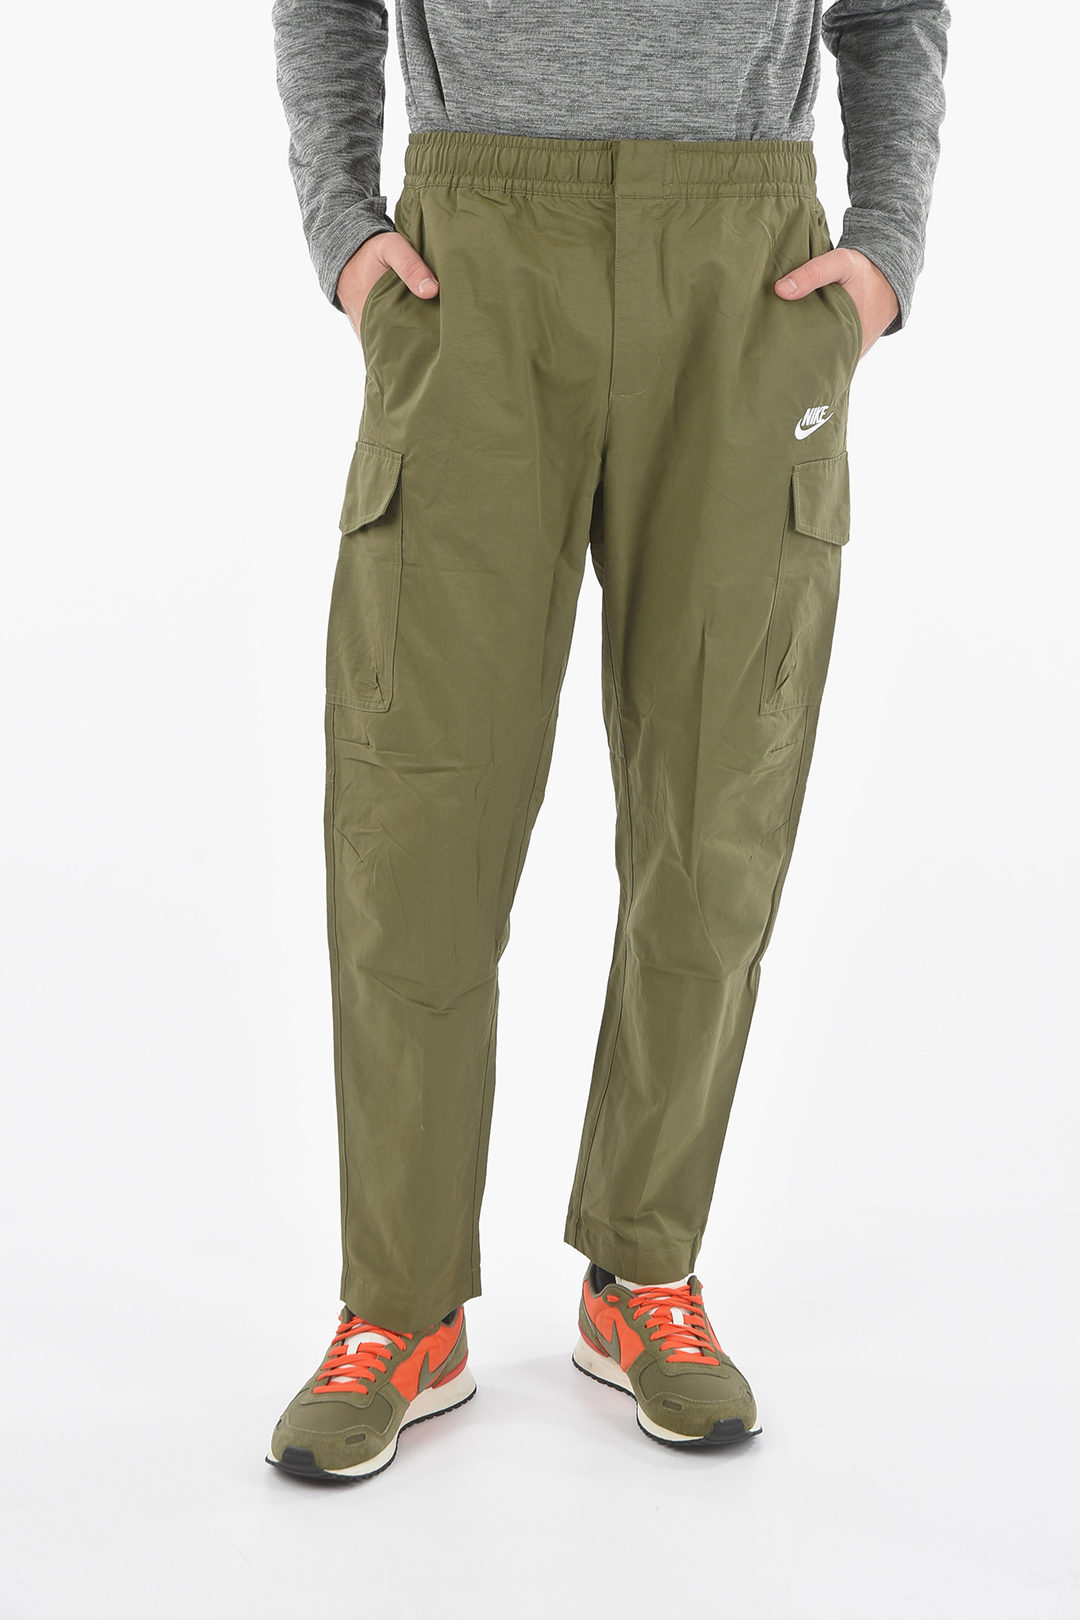 Himent Pants for Women Slant Pocket Cargo Pants (Color : Black, Size : M) :  Buy Online at Best Price in KSA - Souq is now Amazon.sa: Fashion